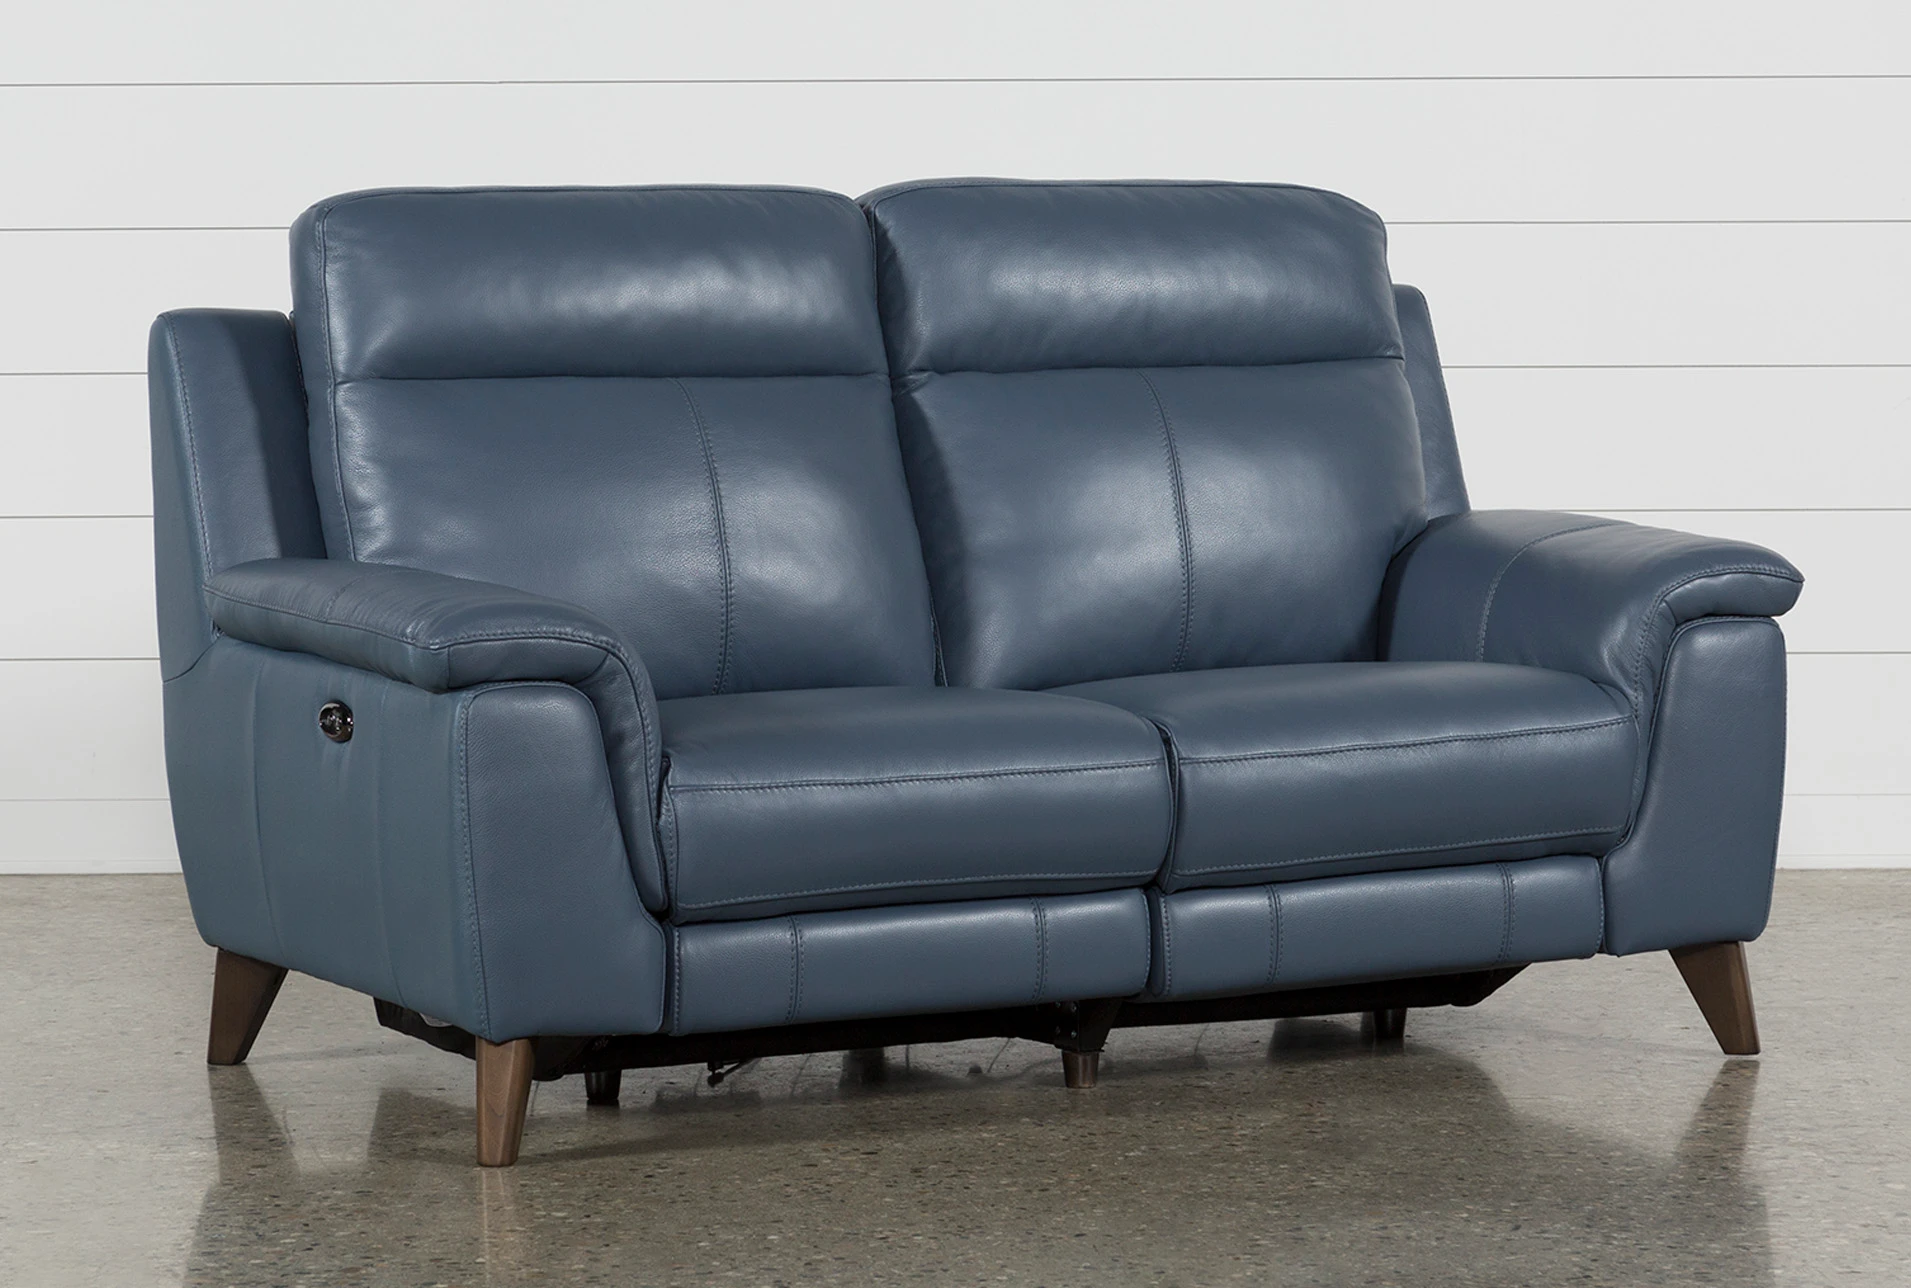 recliner loveseat sleeper sofa leather